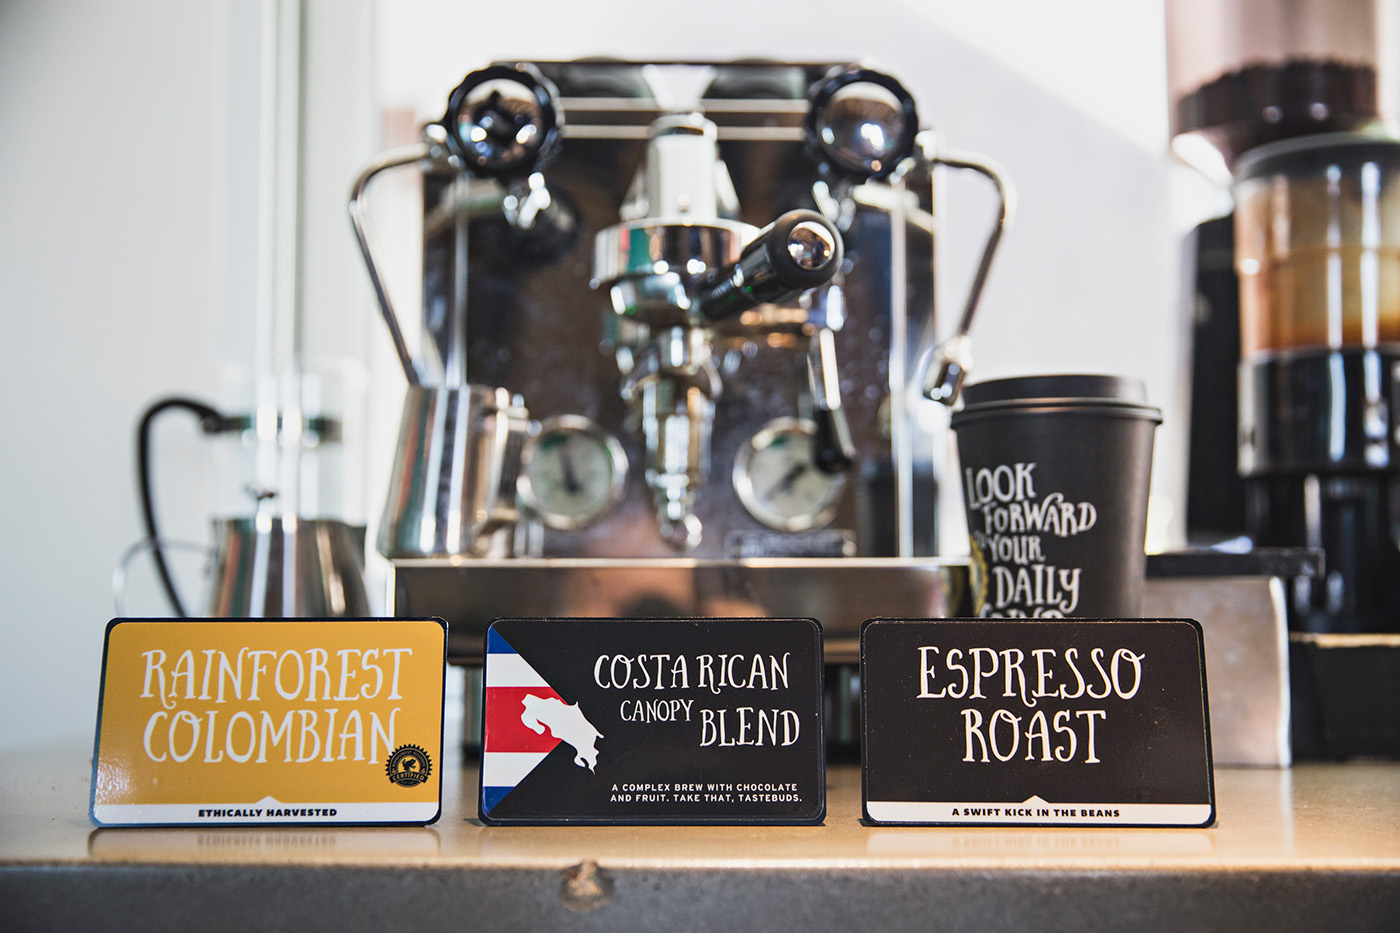 Rebrand brand identity Coffee cup design dash in cafe Collateral